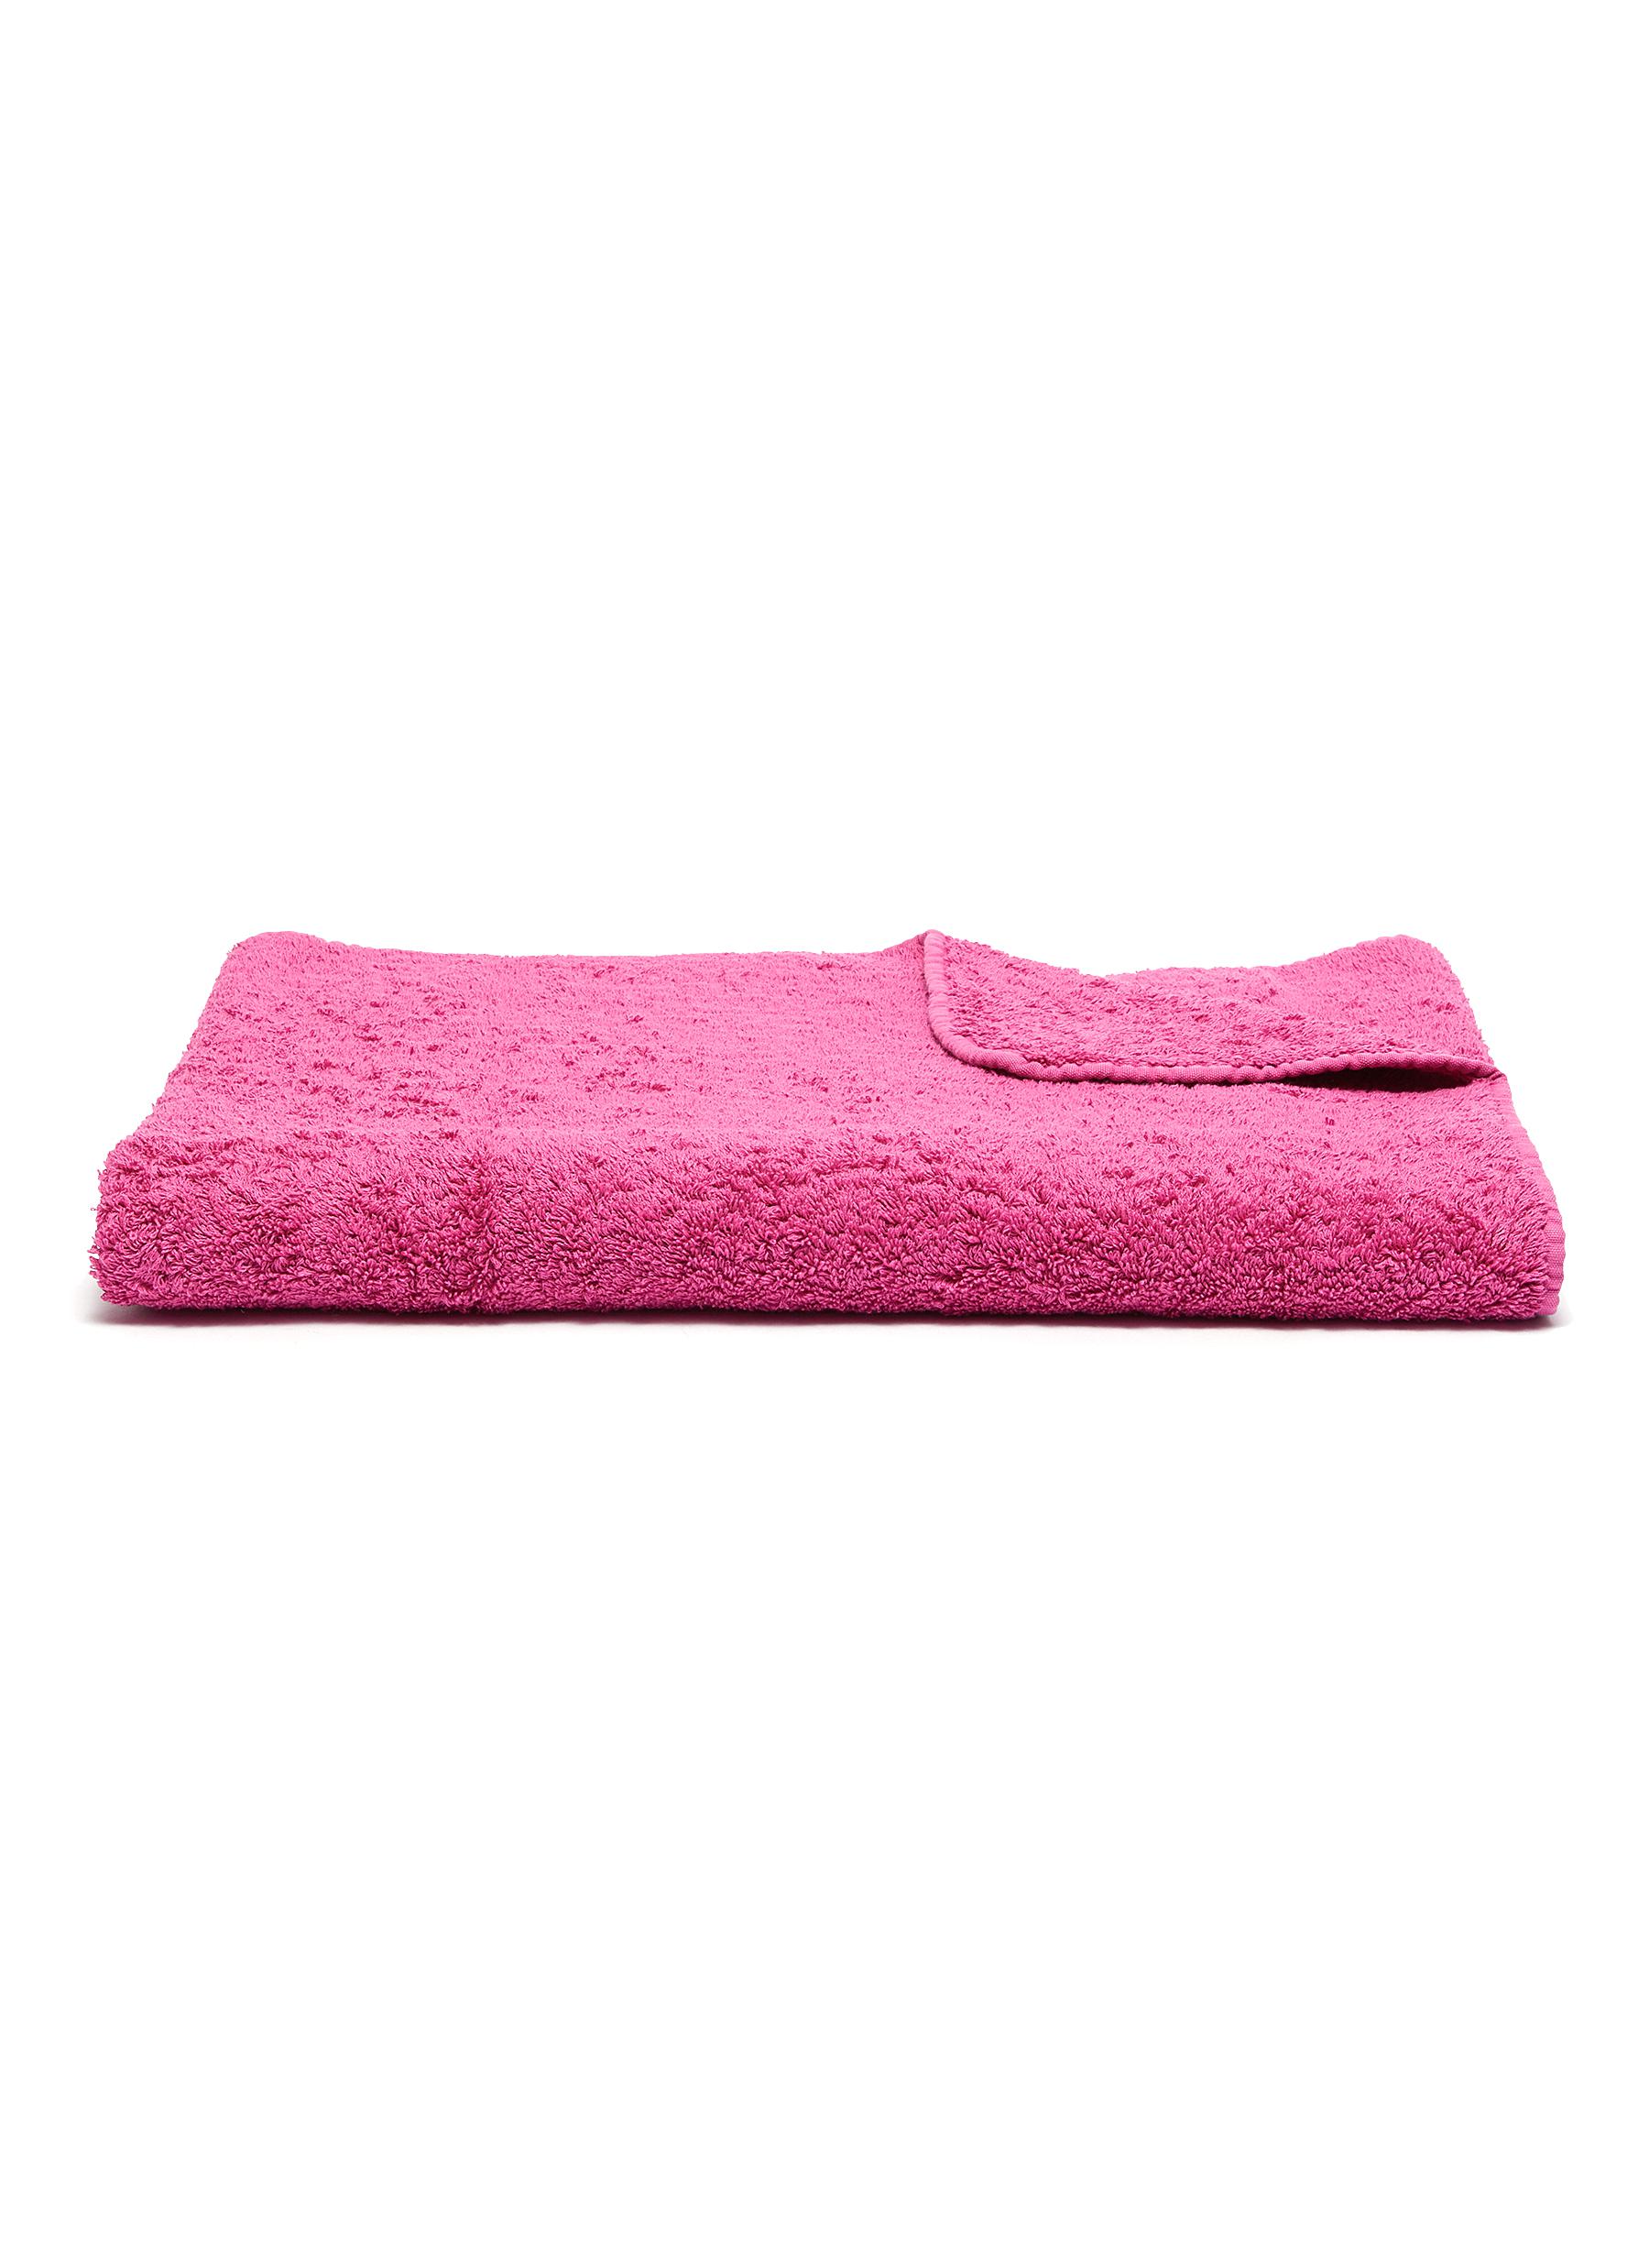 Abyss Super Pile Cotton Bath Towel - Confetti